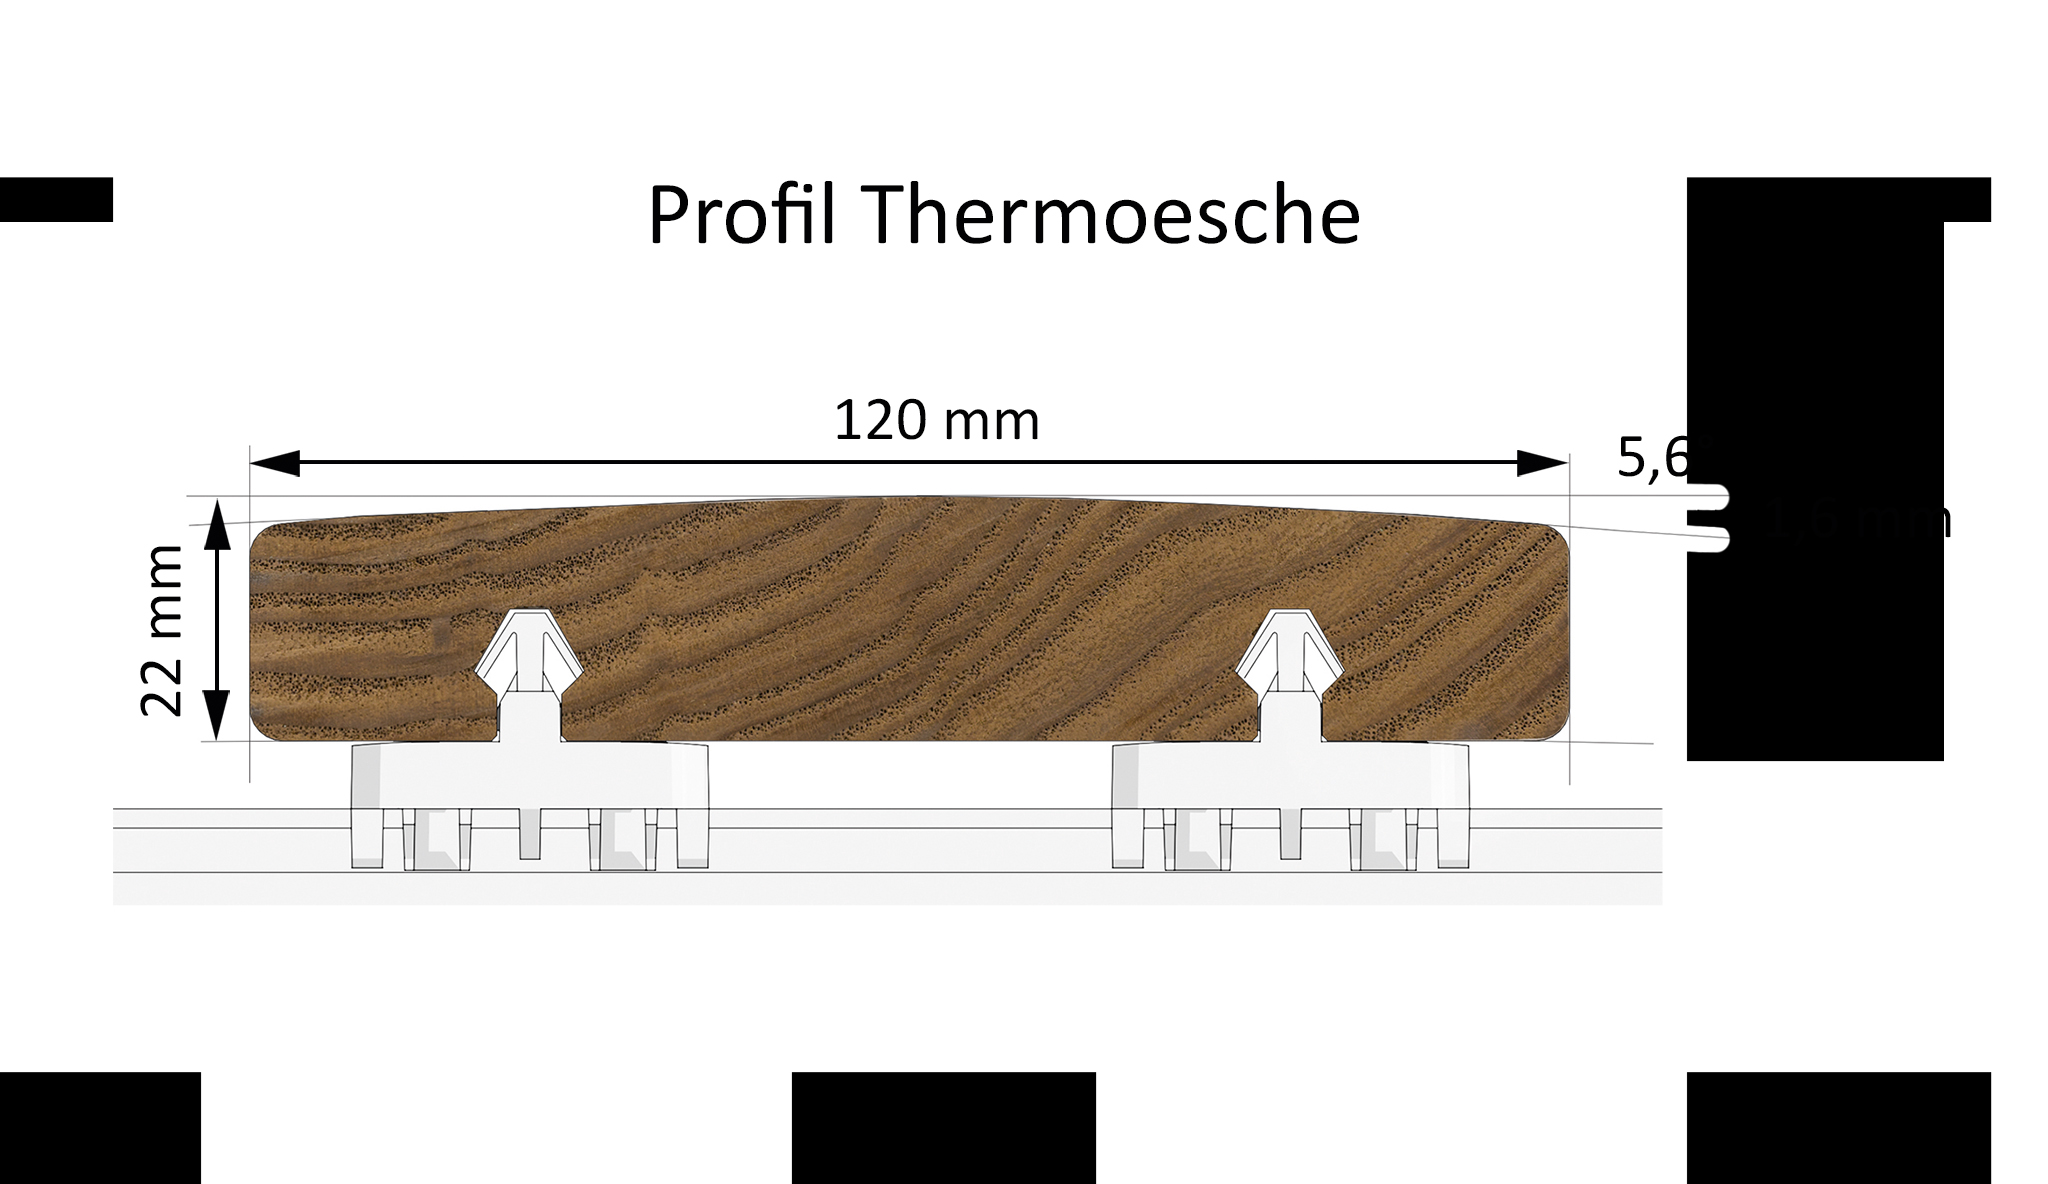 Grad Thermoesche Deck 2100 mm